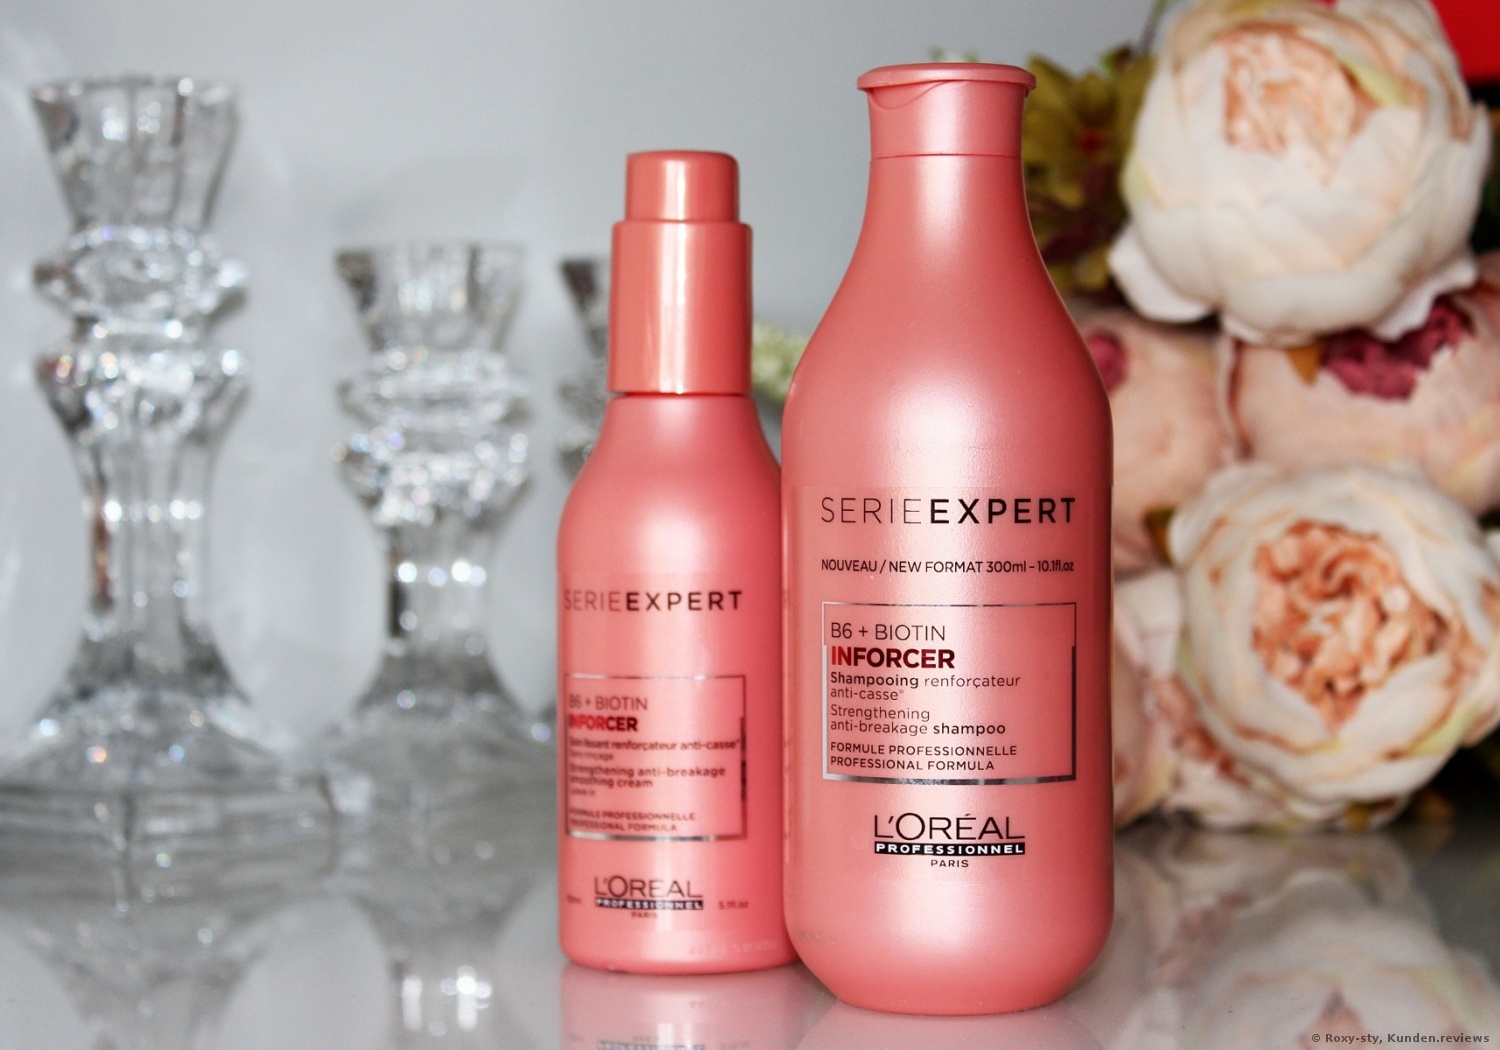 L'Oréal Professionnel Serie Expert Inforcer Shampoo